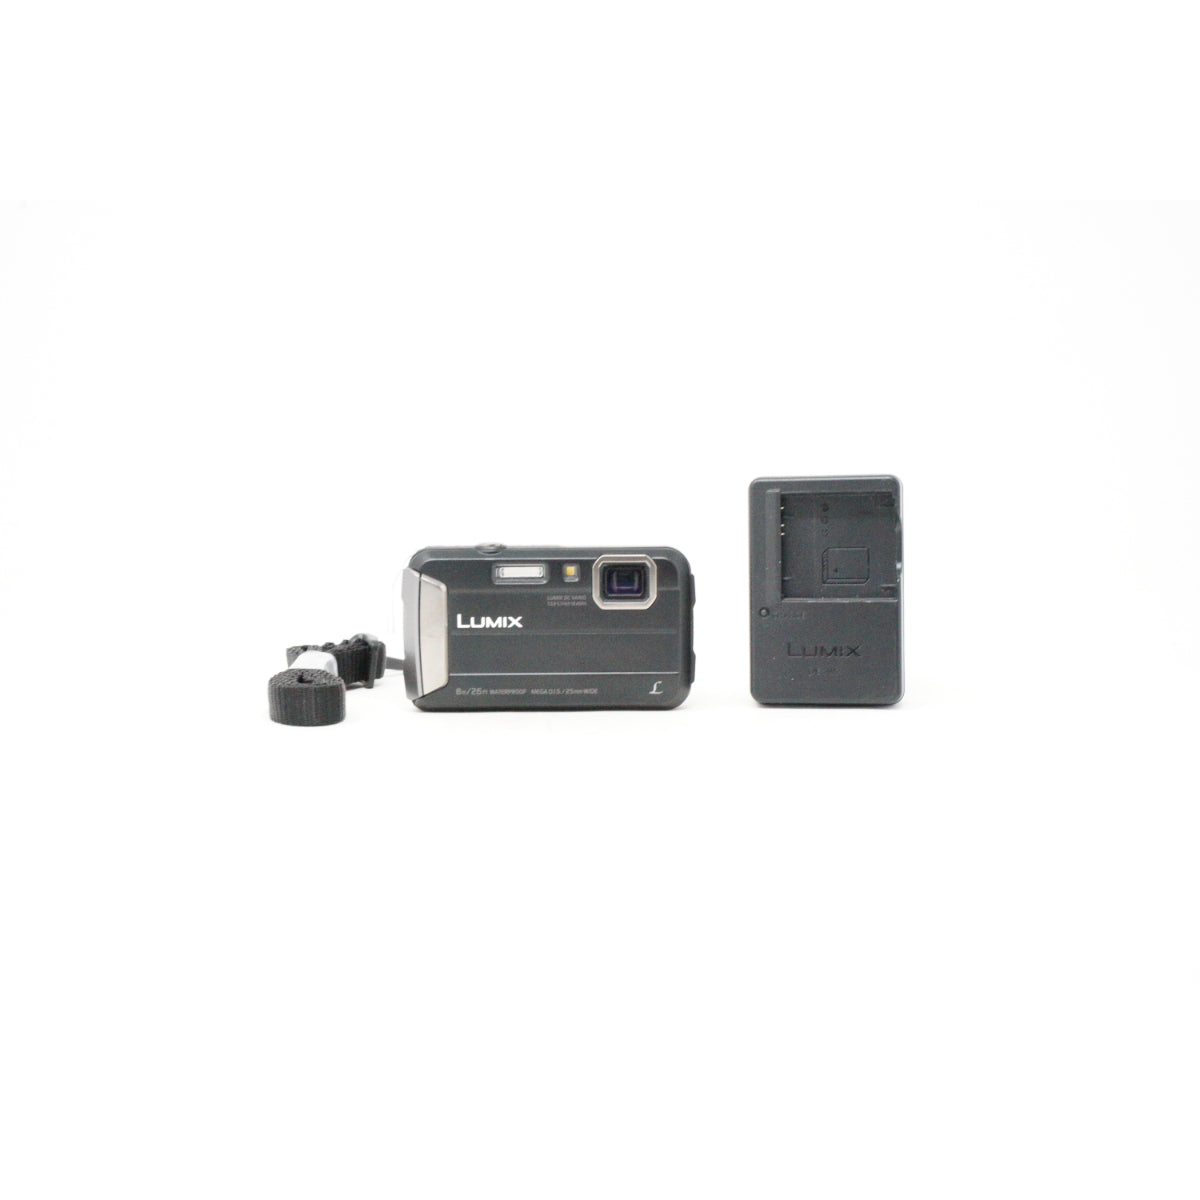 Used Panasonic DMC-FT30 waterproof digital compact camera